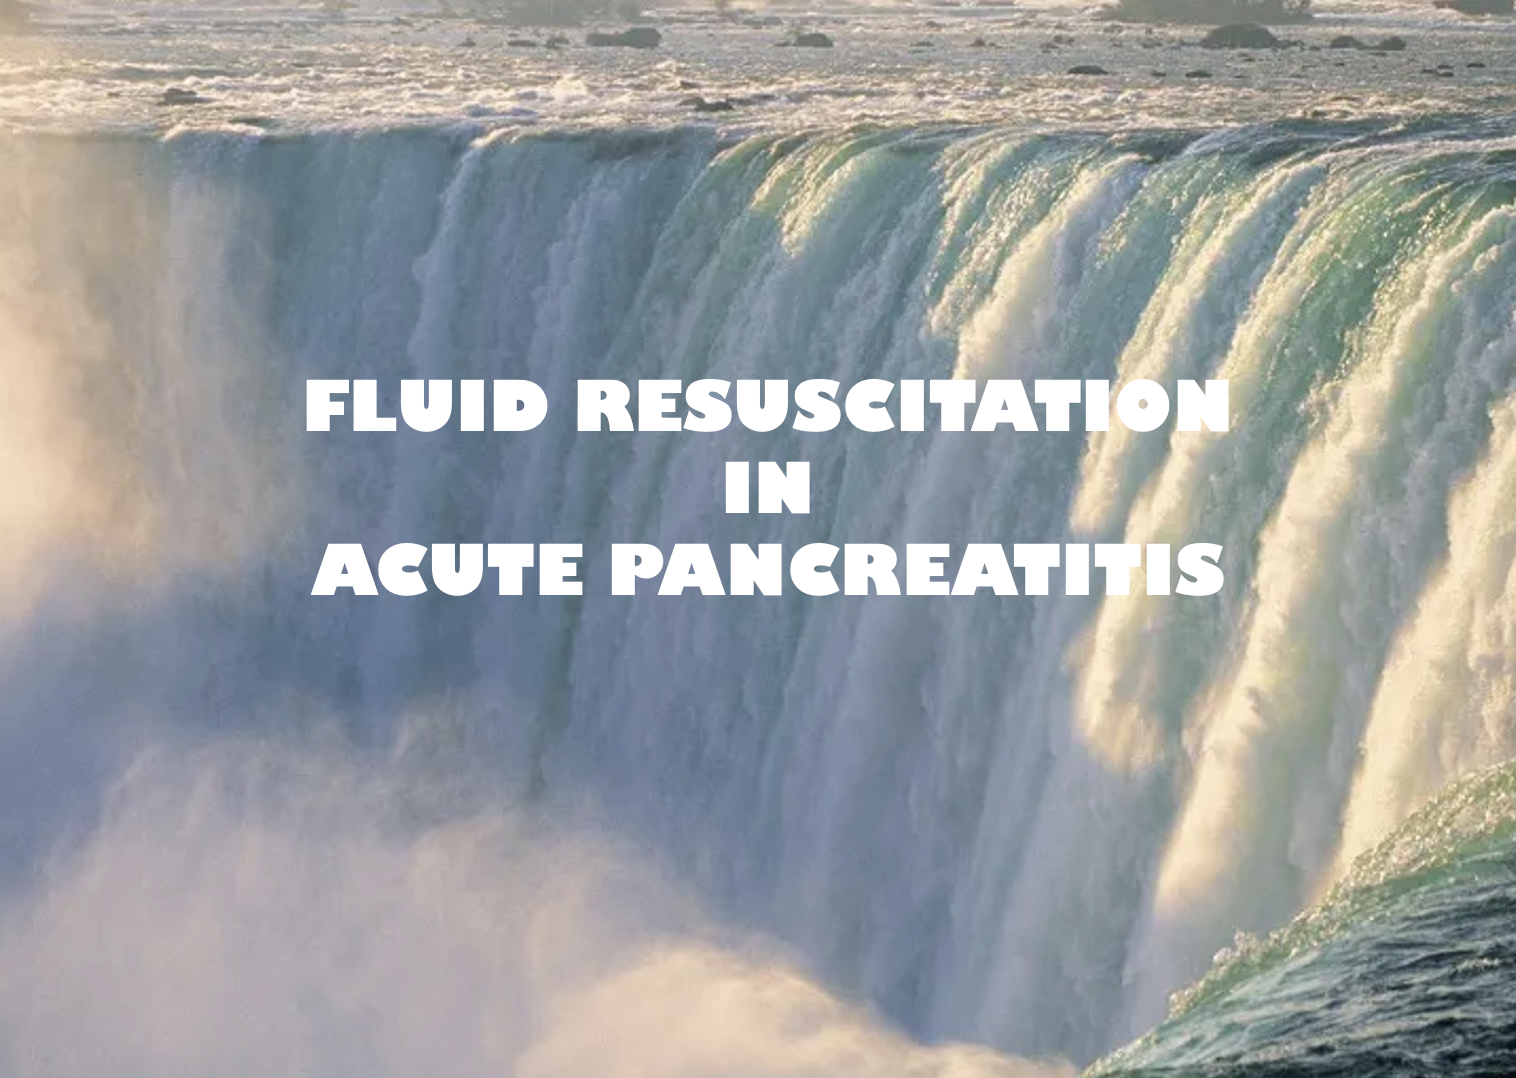 Fluid Resuscitation in Pancreatitis